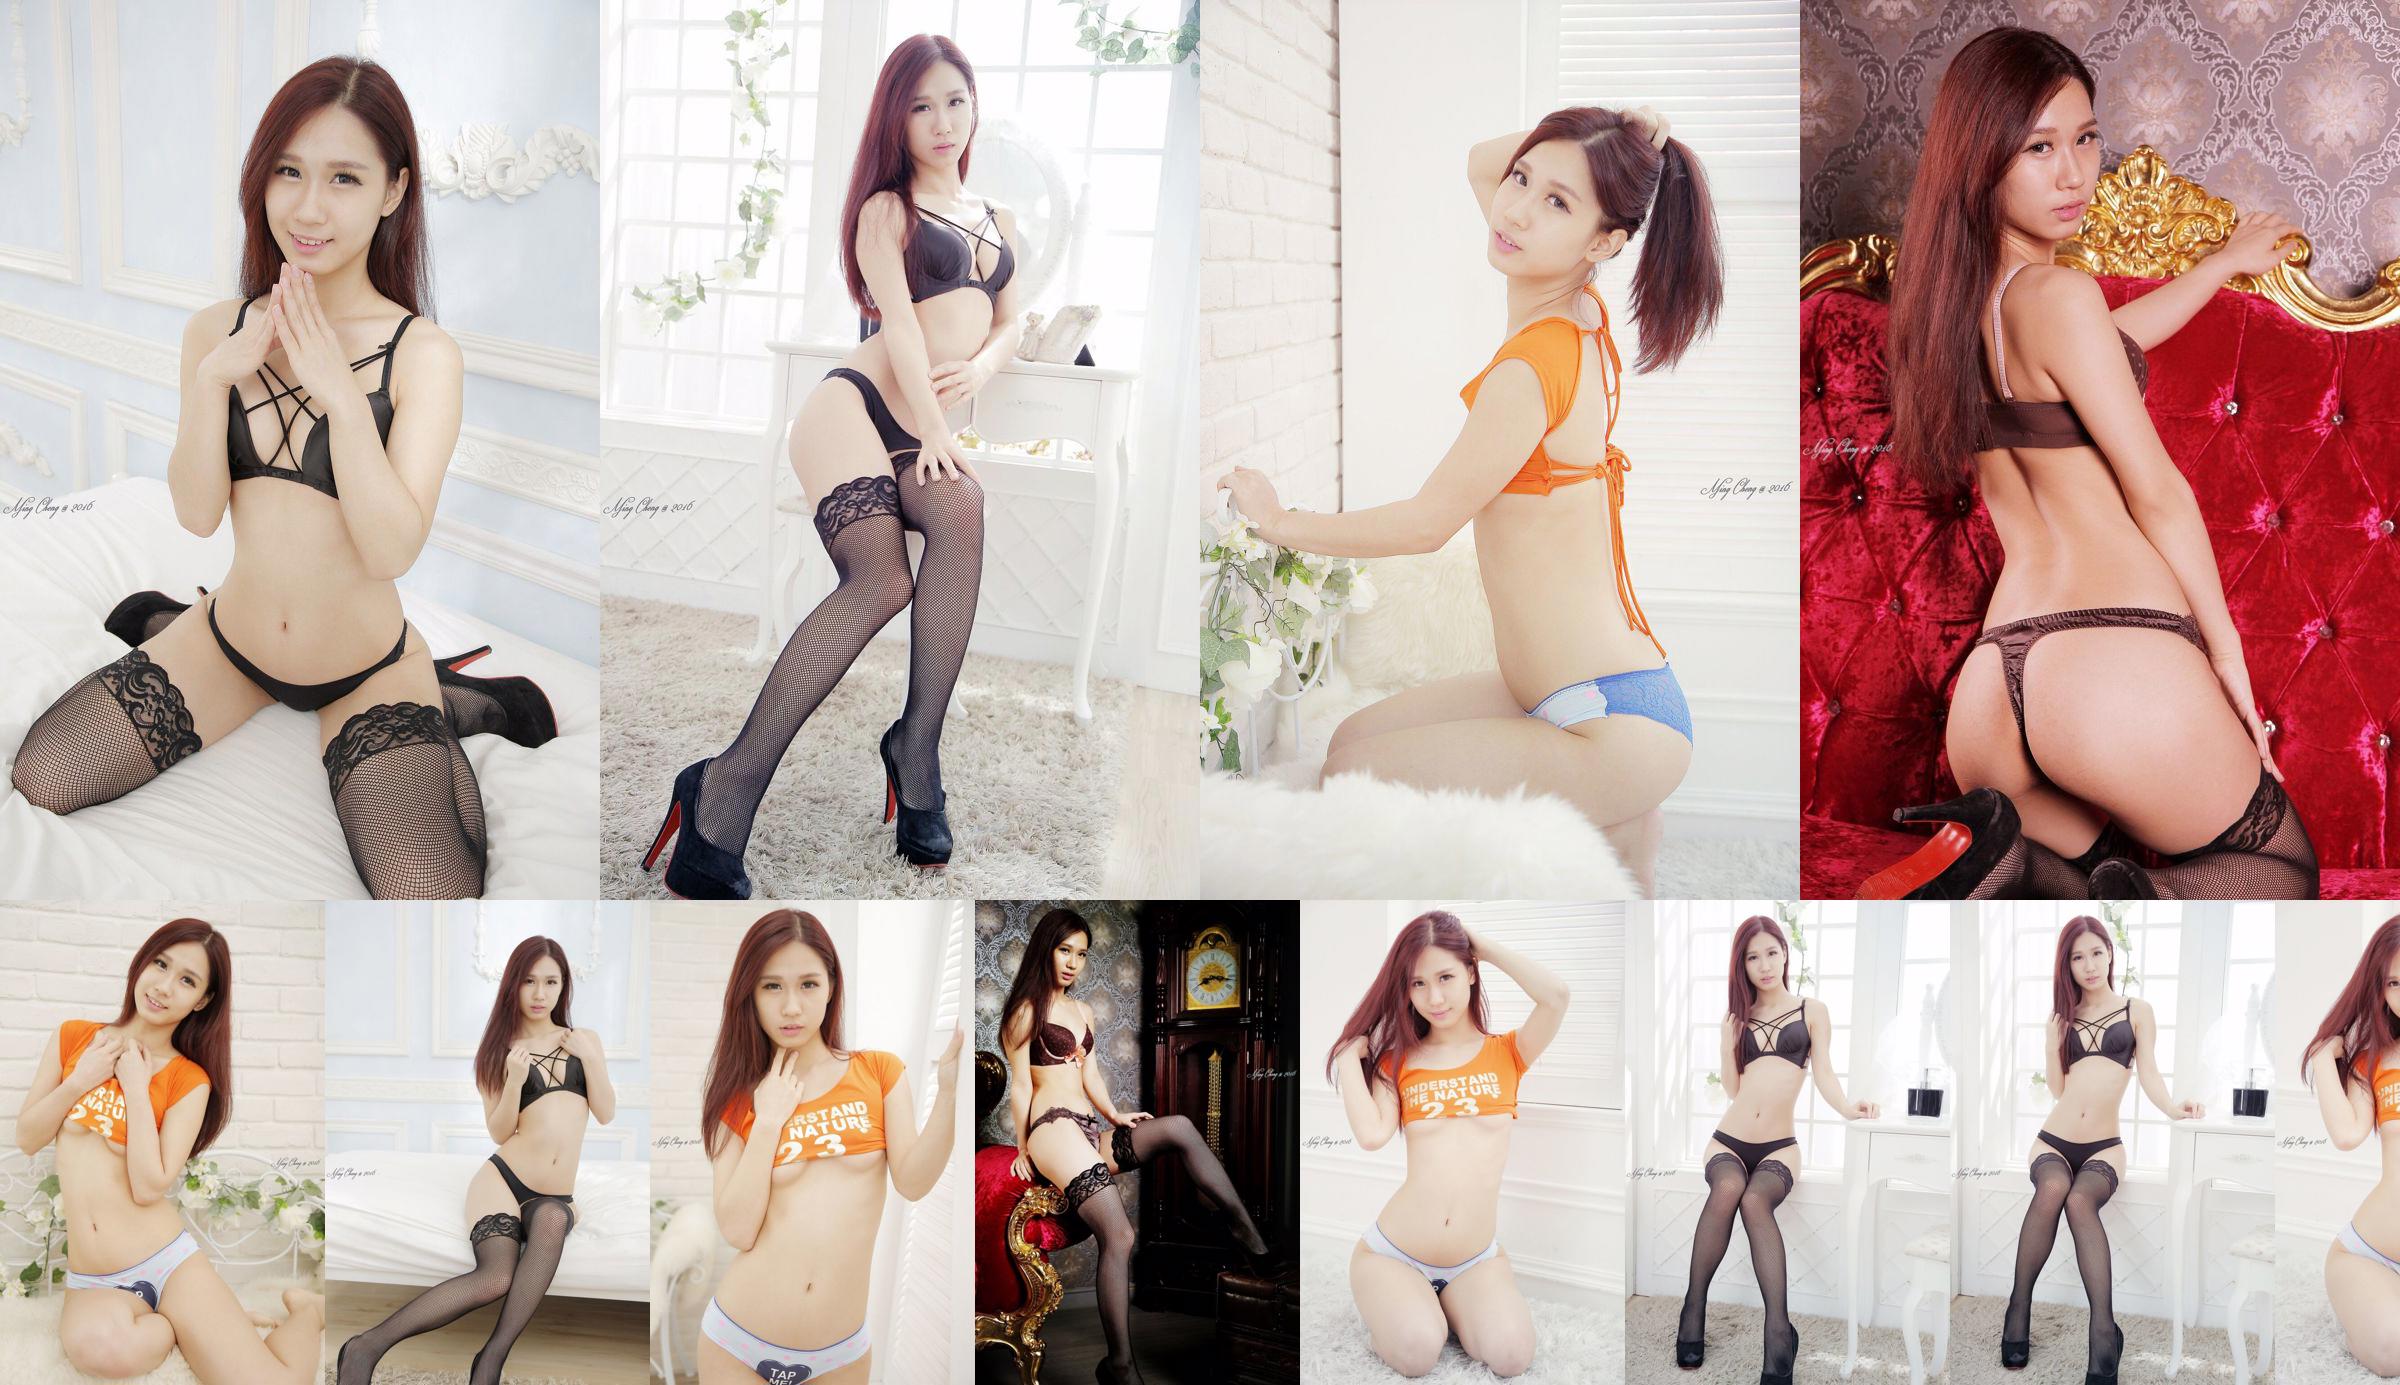 [Taiwan Zhengmei] Belle underwear studio shooting No.c672f3 Page 3